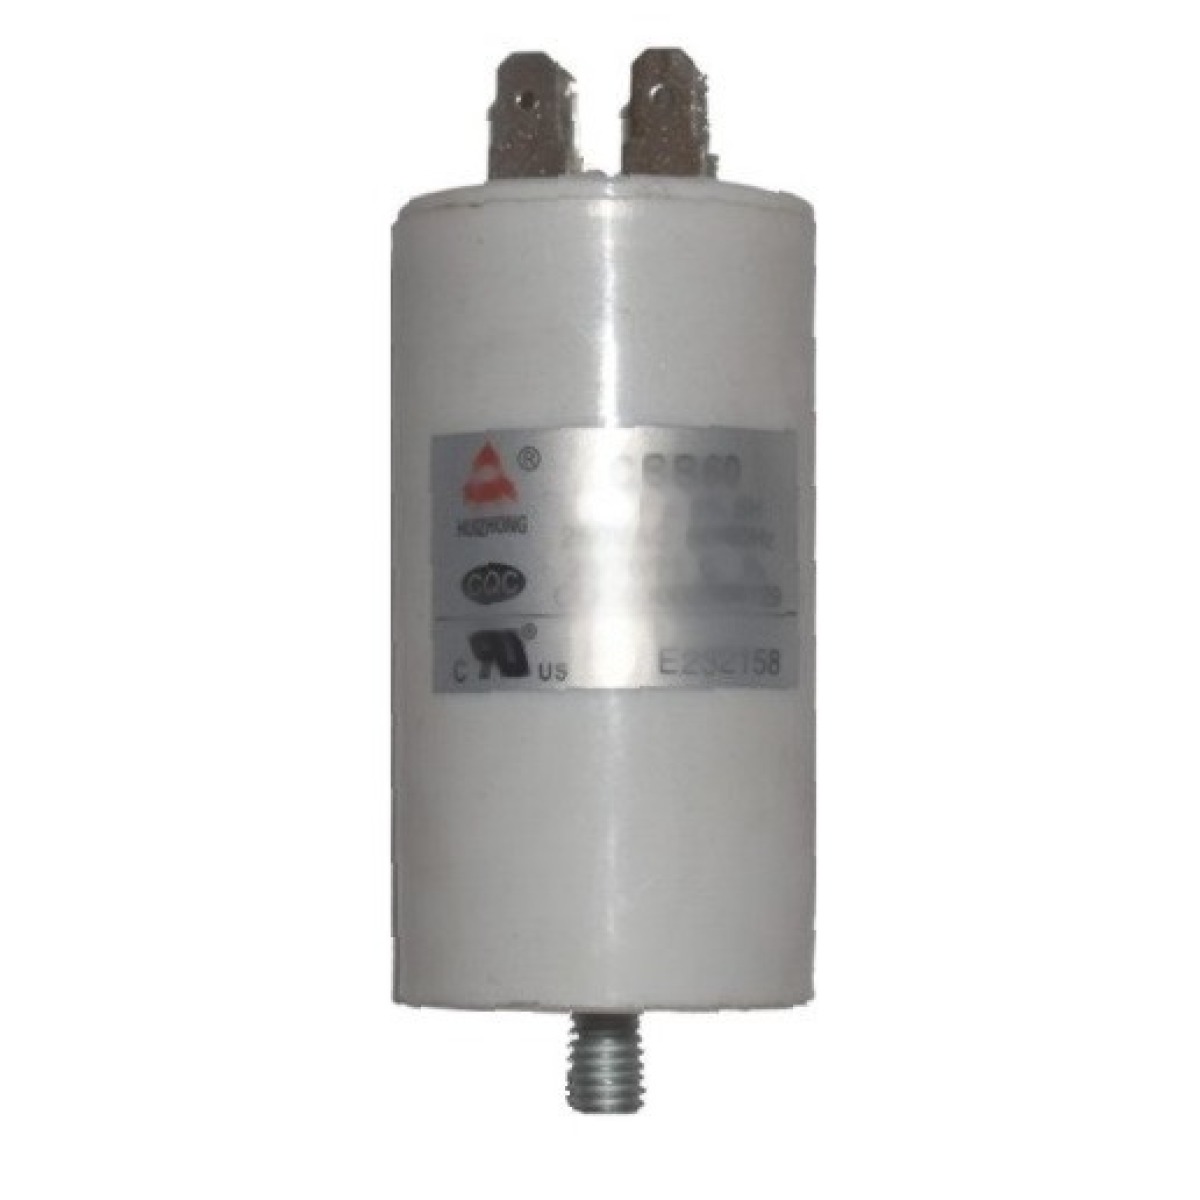 Kondensator - 40 µF - 230 V